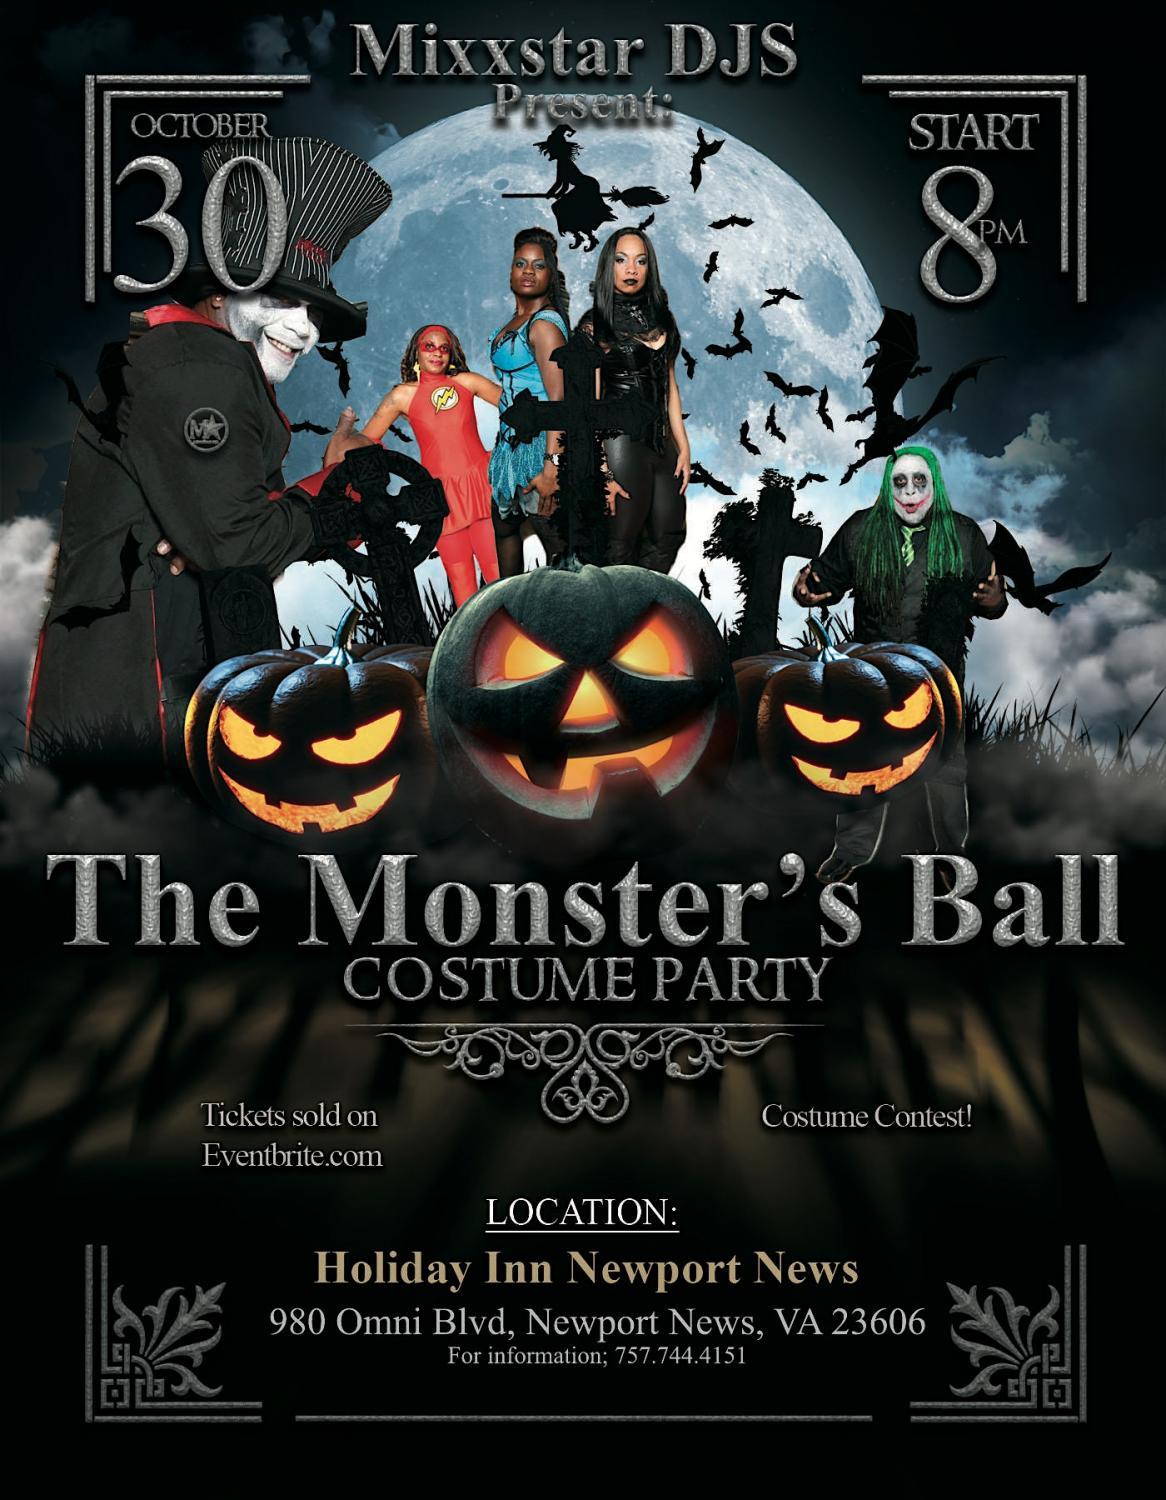 The Monster's Ball in Newport News, VA
Sat Oct 29, 8:30 PM - Sun Oct 30, 1:00 AM
in 10 days